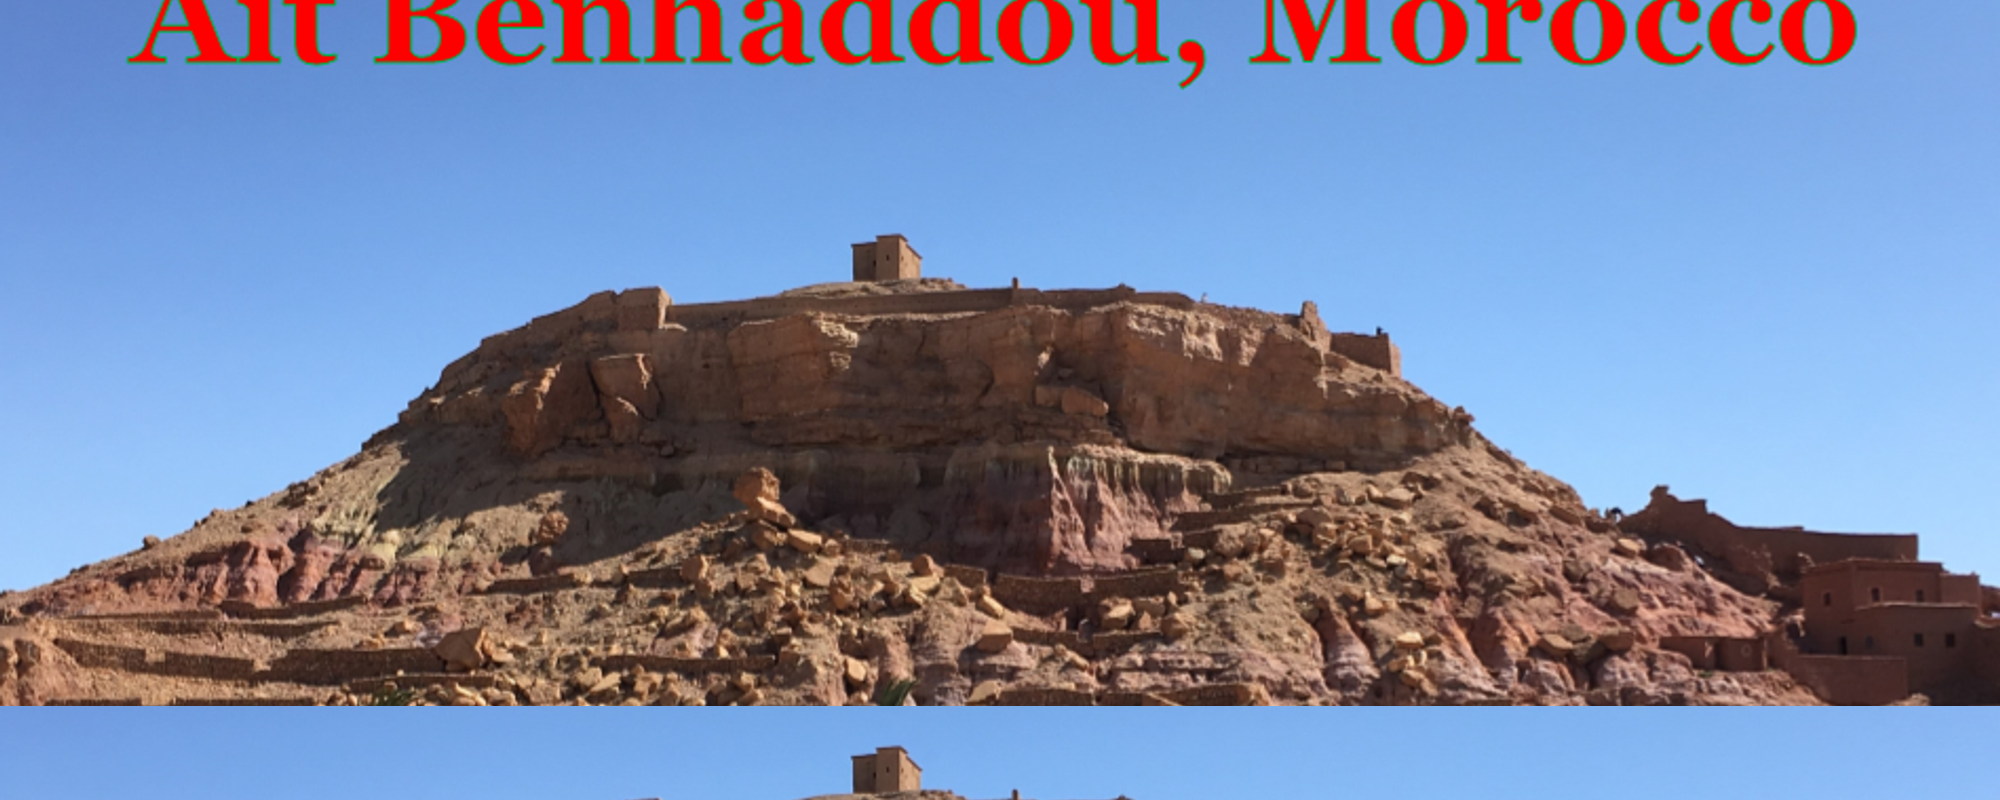 Kasbah Ait Benhaddou, Morocco - A UNESCO World Heritage Site